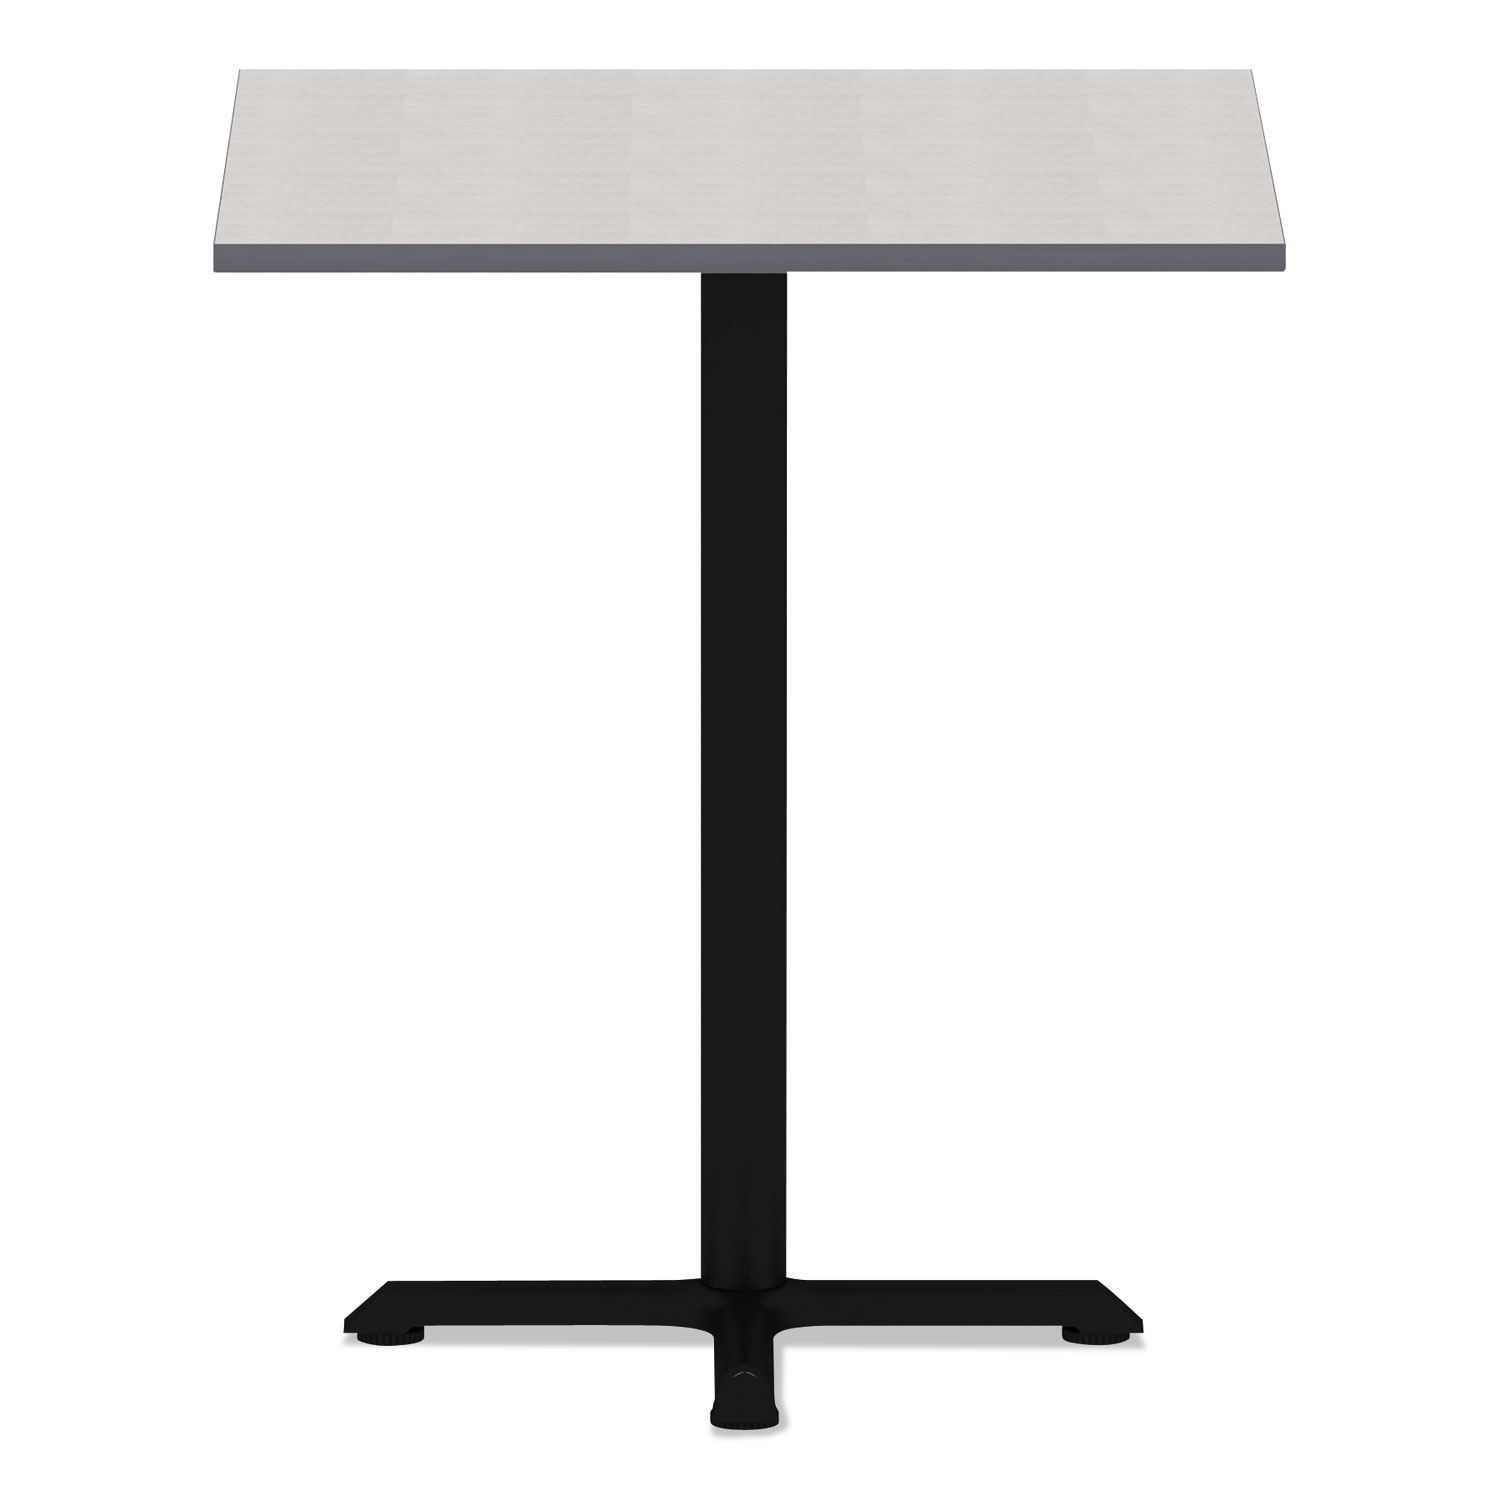  Alera ALETTSQ36WG Reversible Laminate Table Top, Square, 35 3/8w x 35 3/8d, White/Gray (ALETTSQ36WG) 